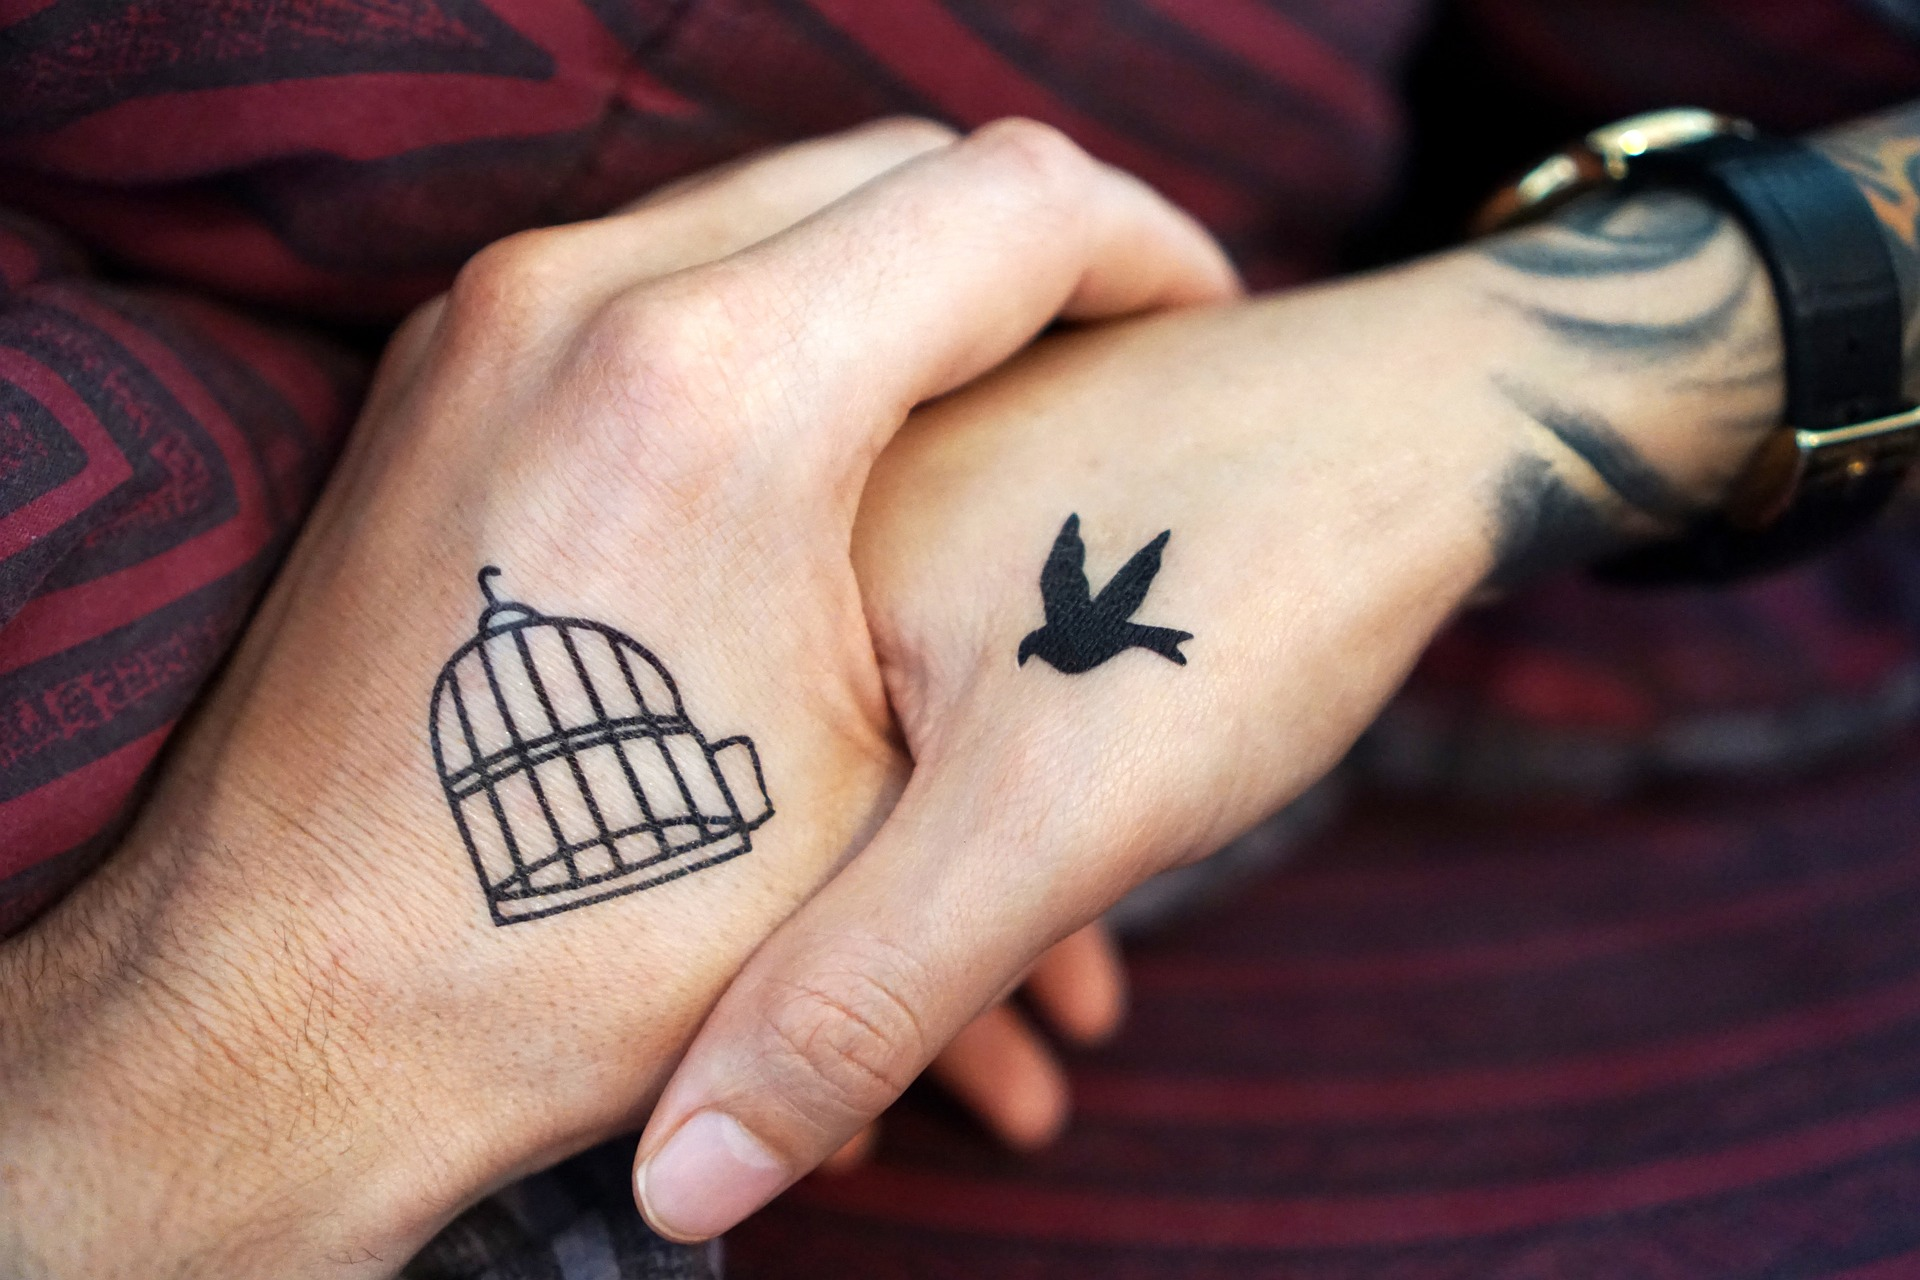 Birdcage Tattoo